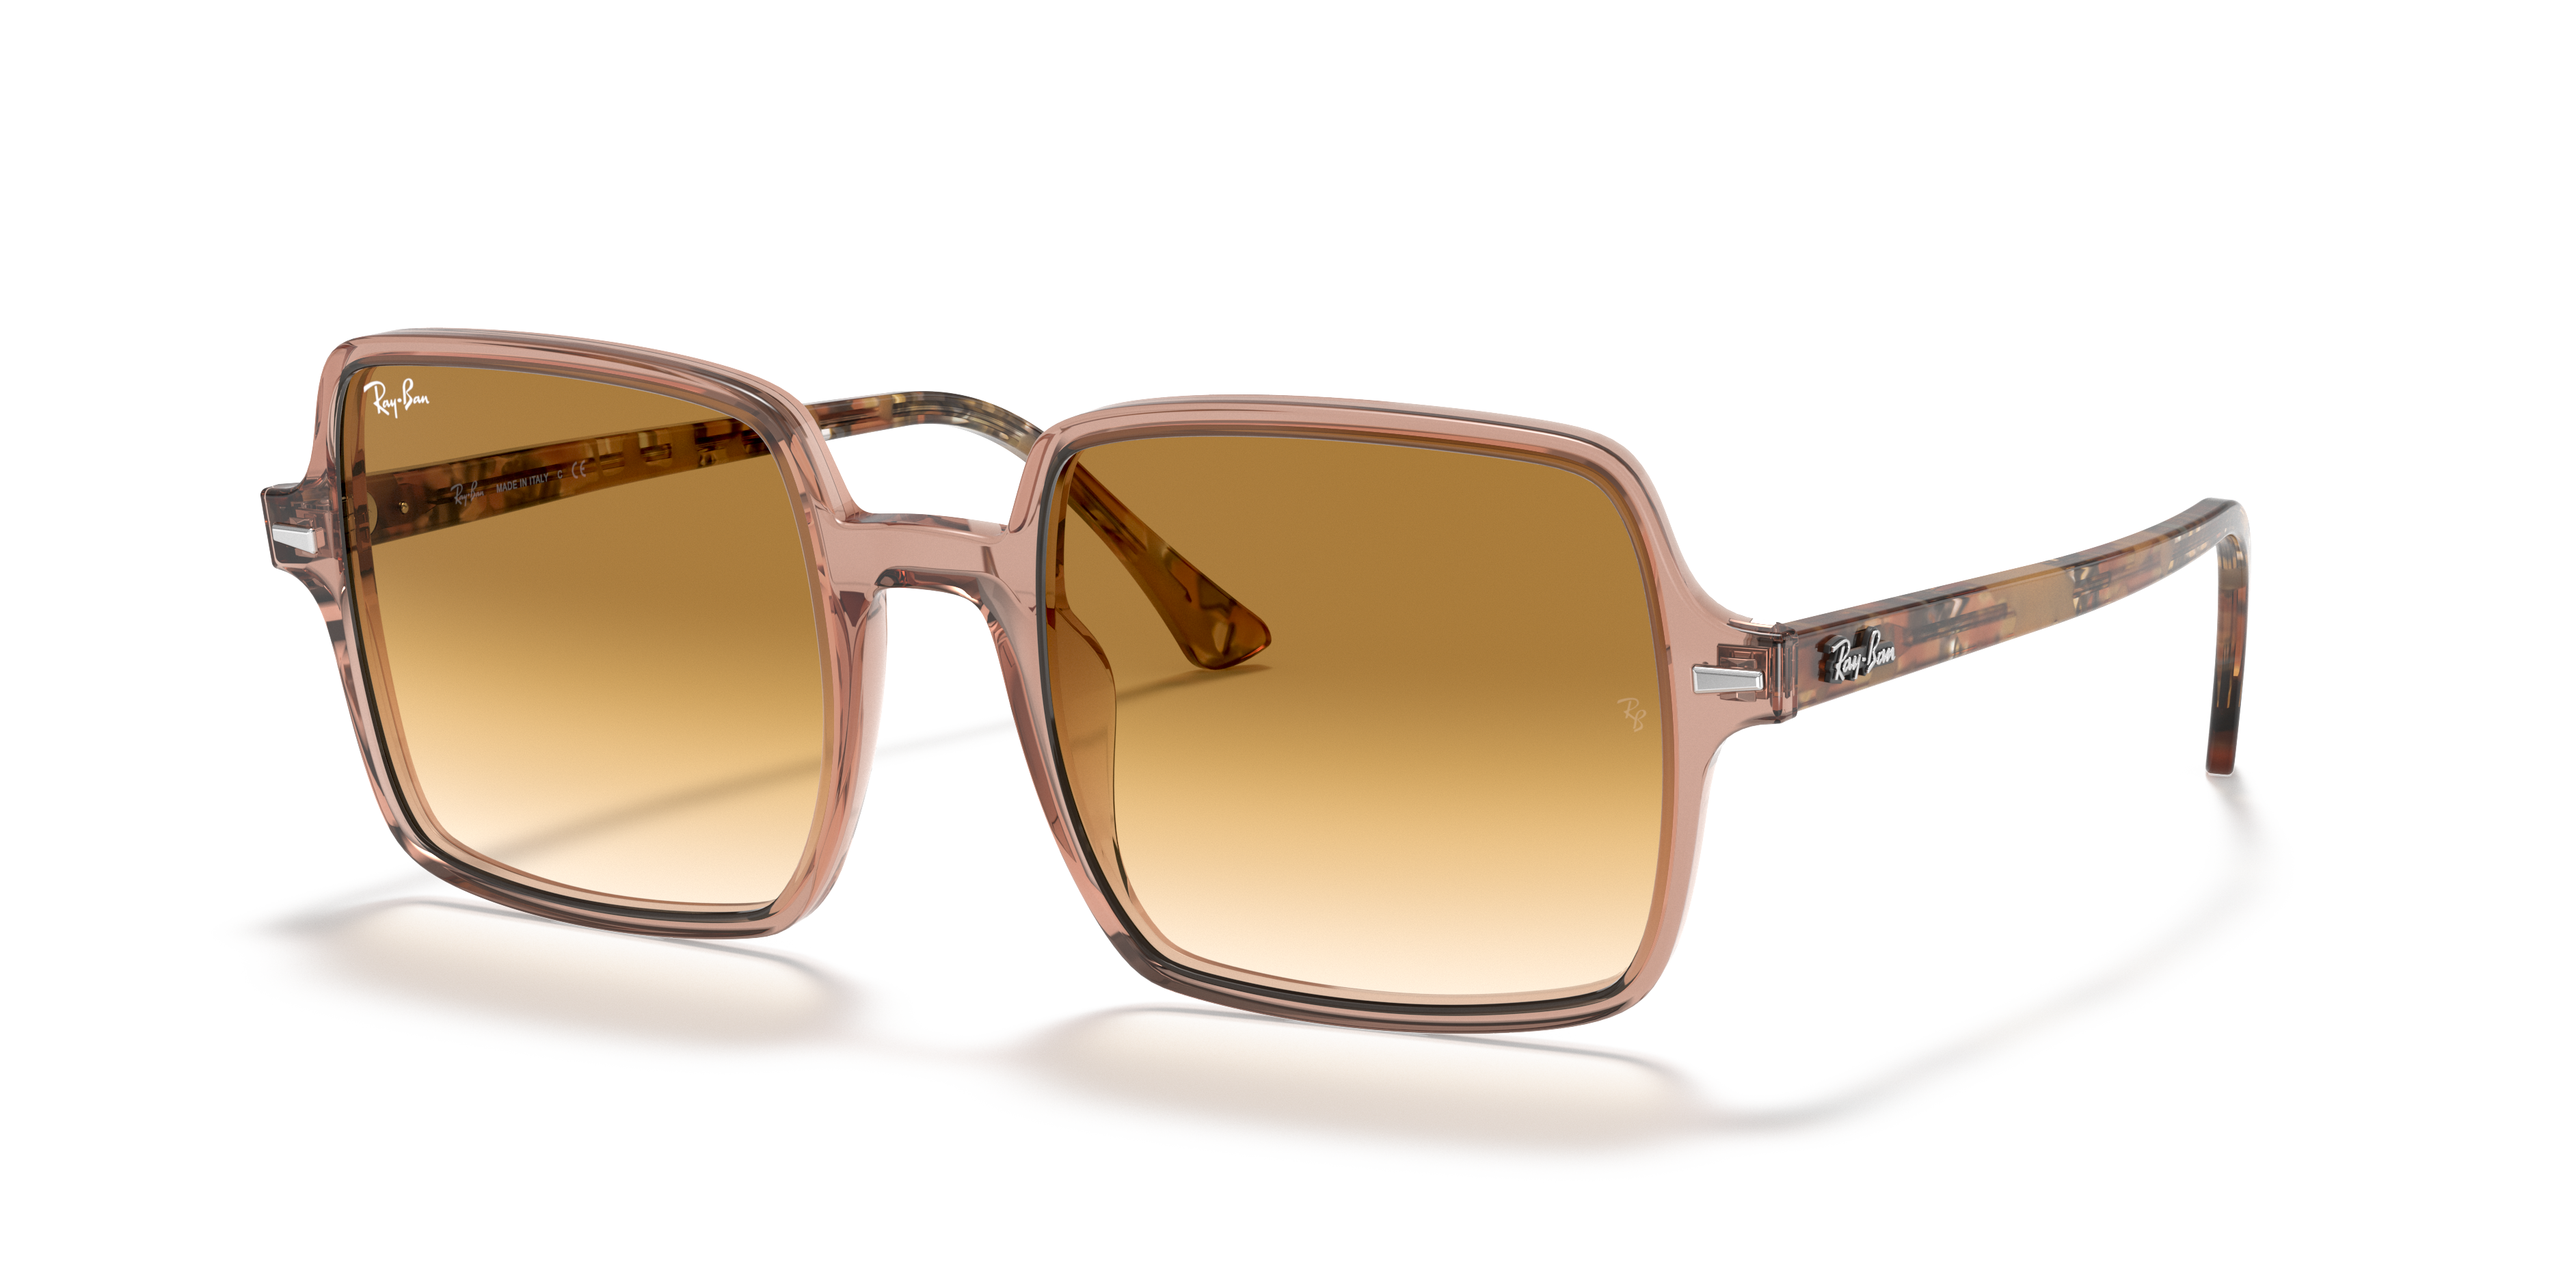 Ray-Ban RB3548N 001/57 51 Men's Square Sunglasses for sale online | eBay